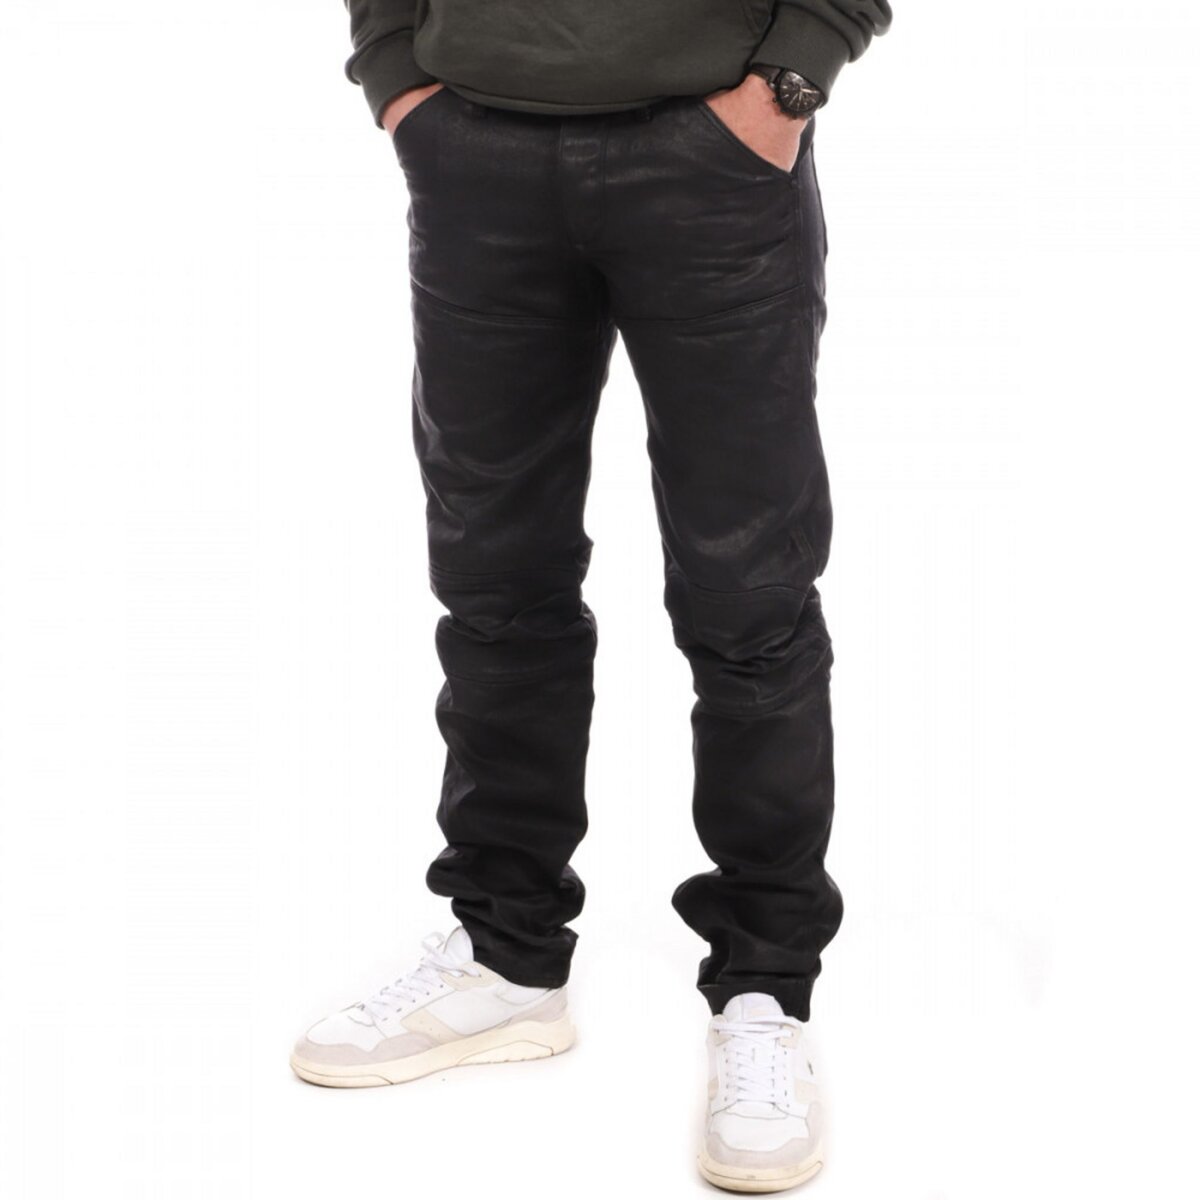  Jeans Noir Enduit Homme G-Star Cobler Smash